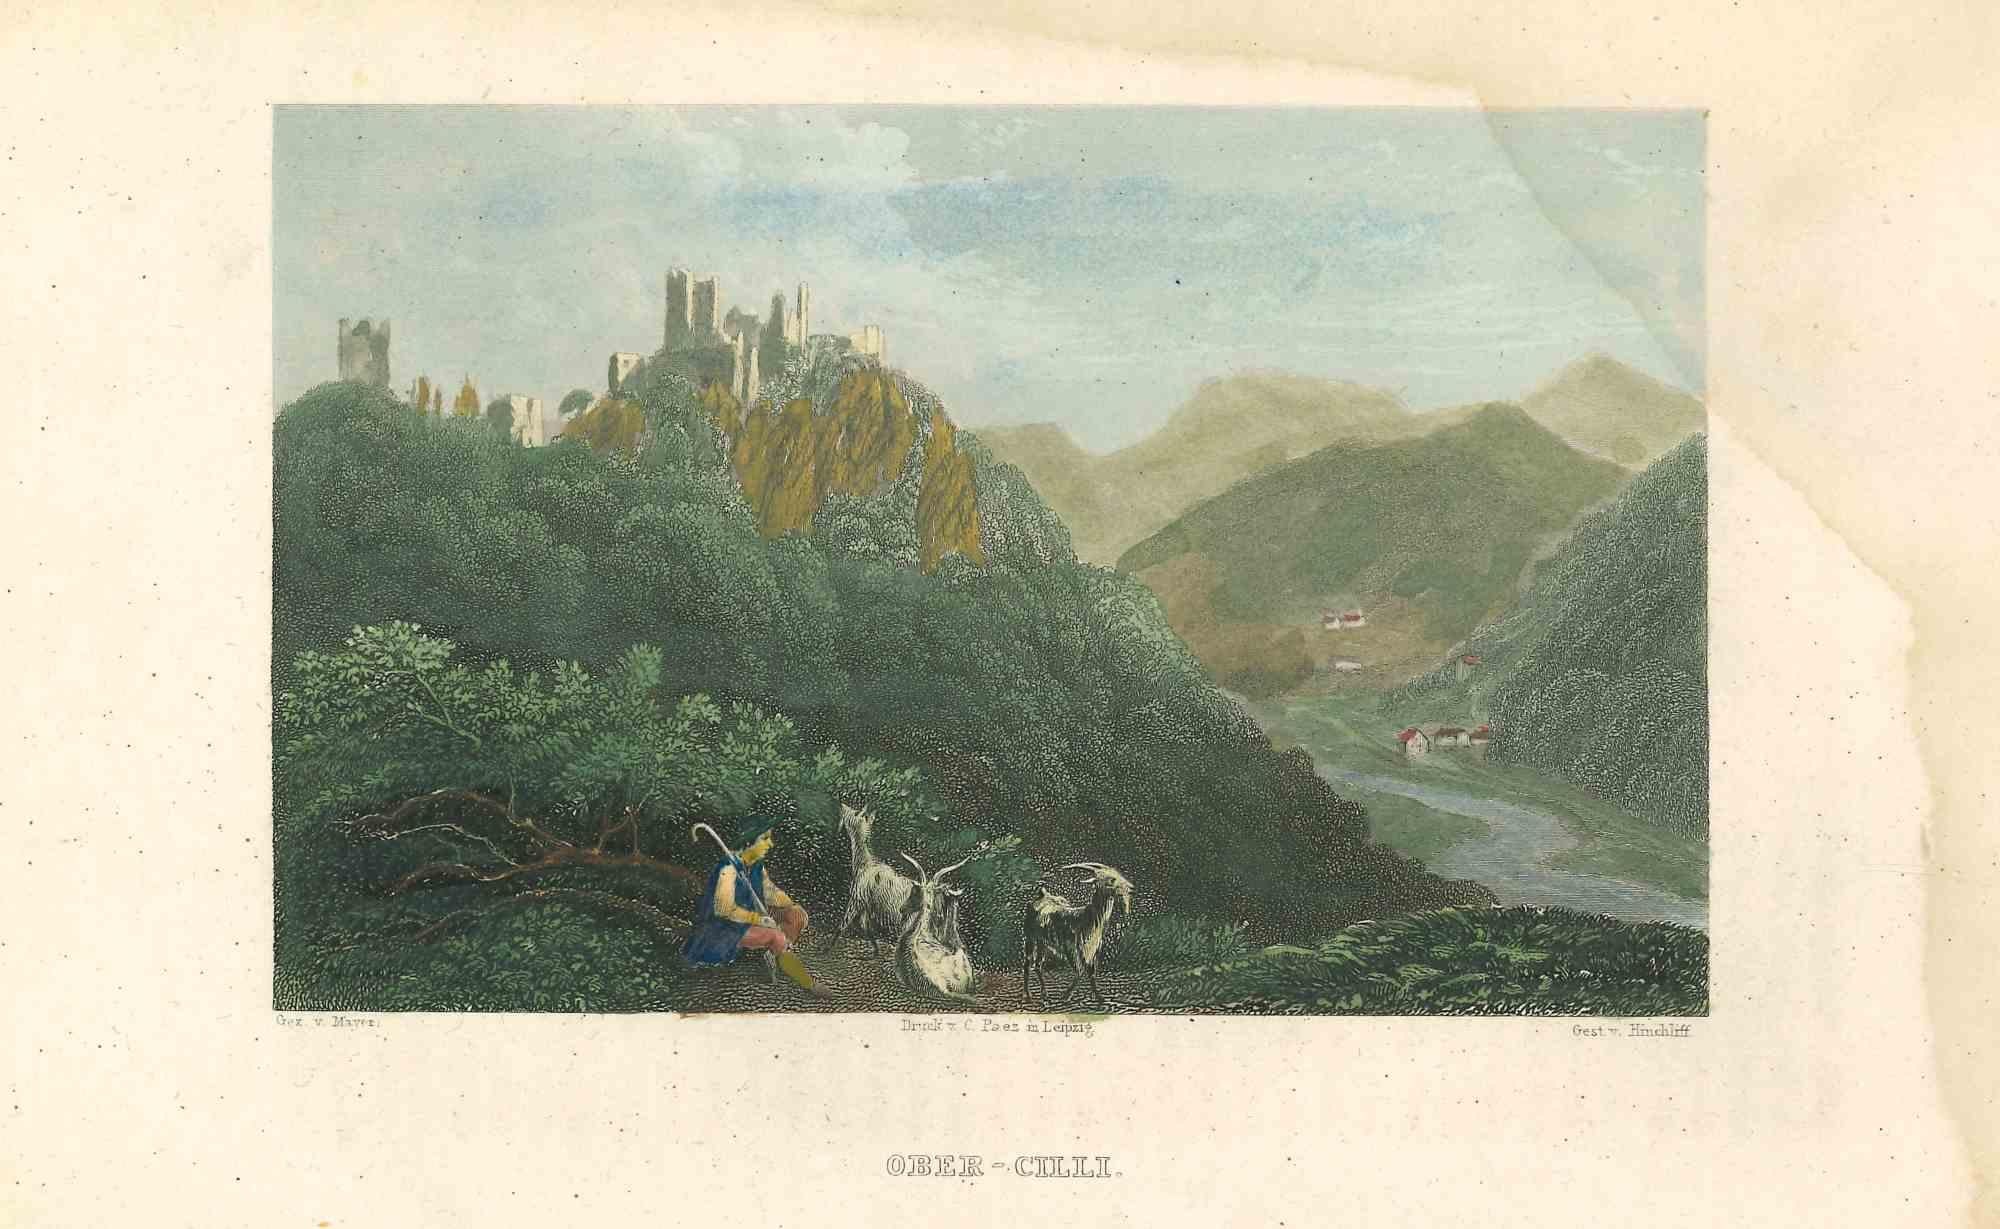 Unknown Landscape Print - Ober - Cilli - Original Lithograph on Paper - Mid-19th Century